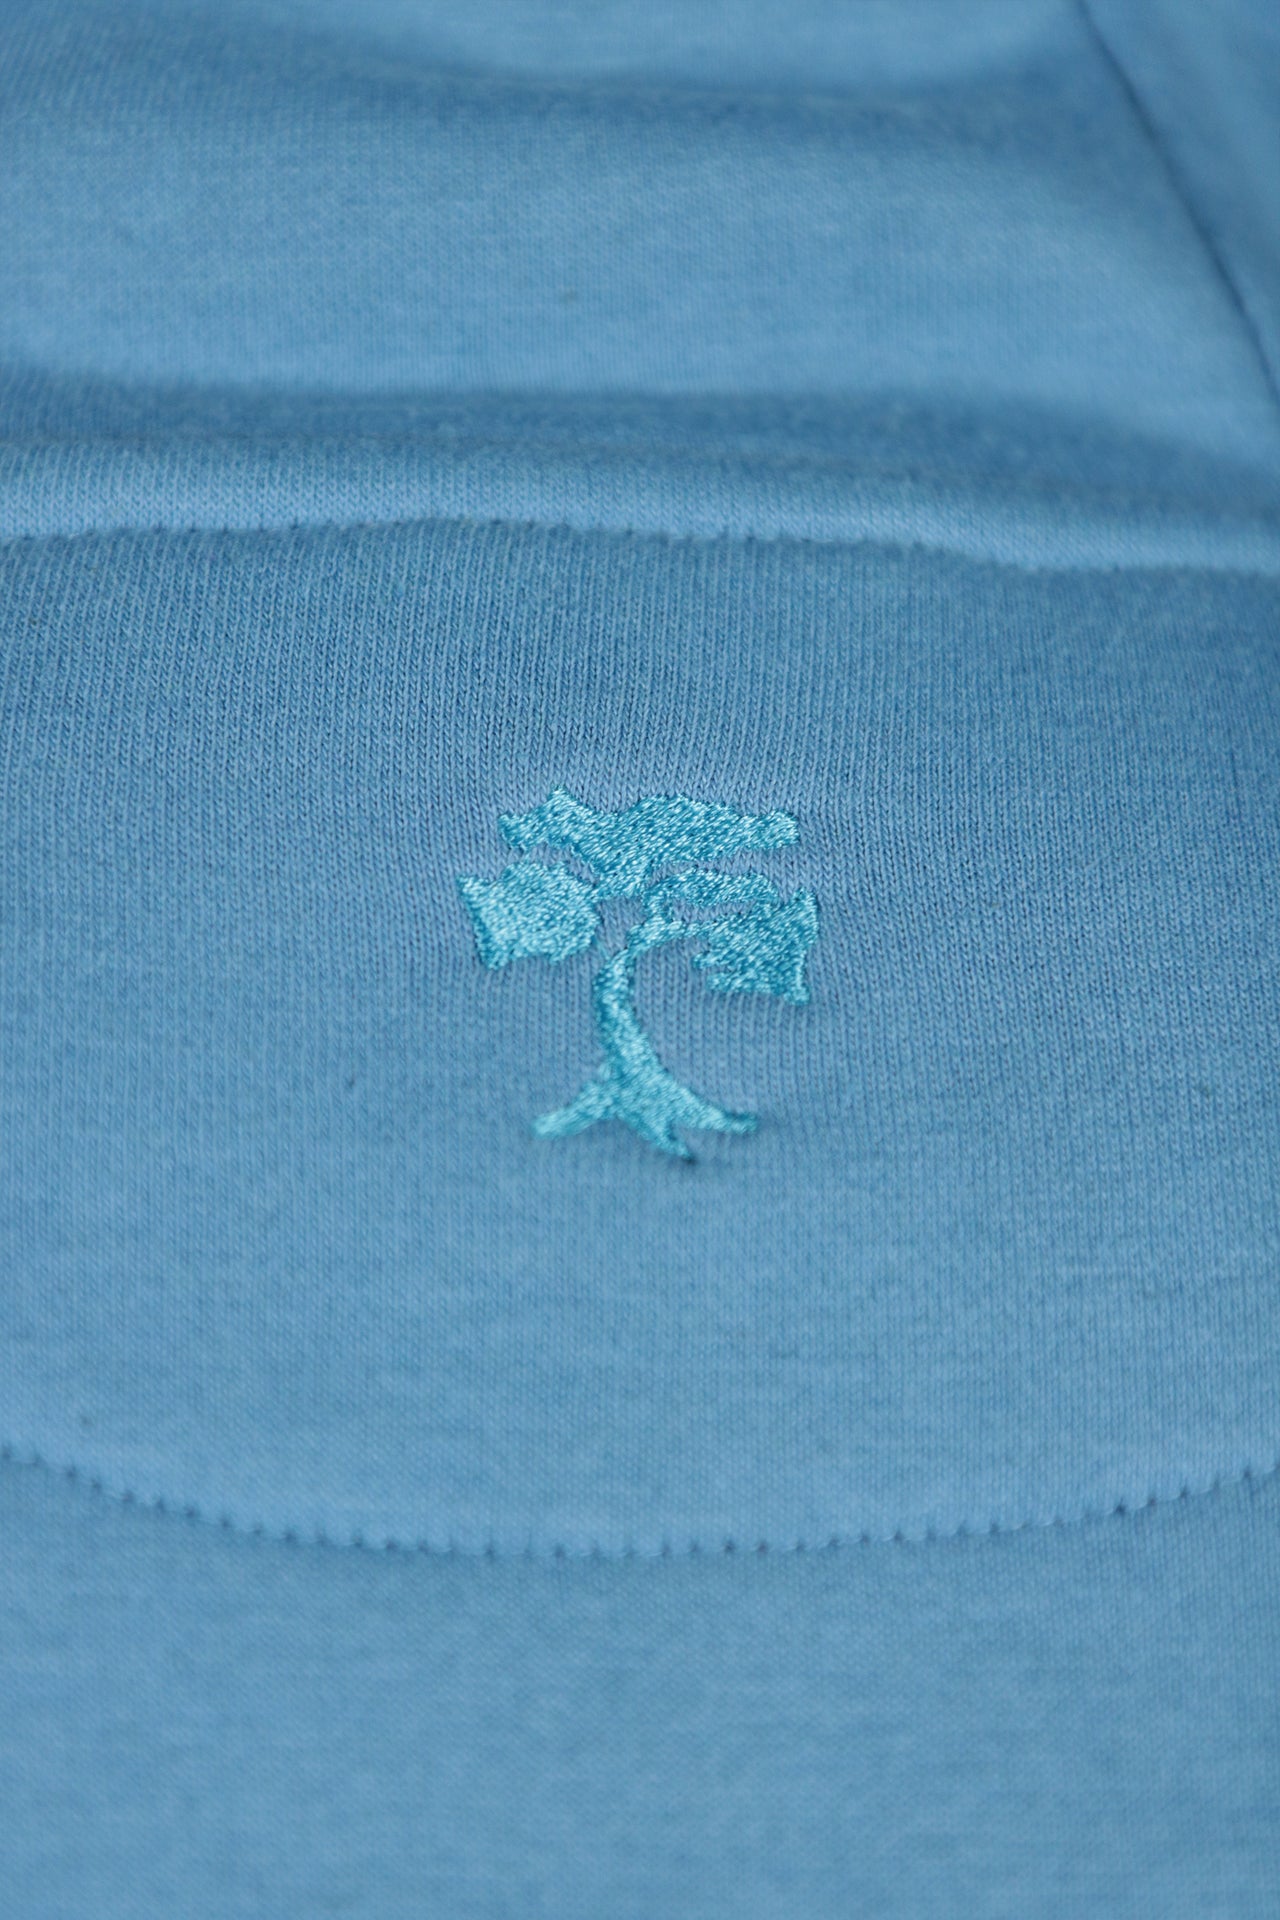 Powder Blue Unbasic Fleece Stash Pocket Sunset Park Tapered Zipper Hoodie | Fleece Light Blue Hoodie